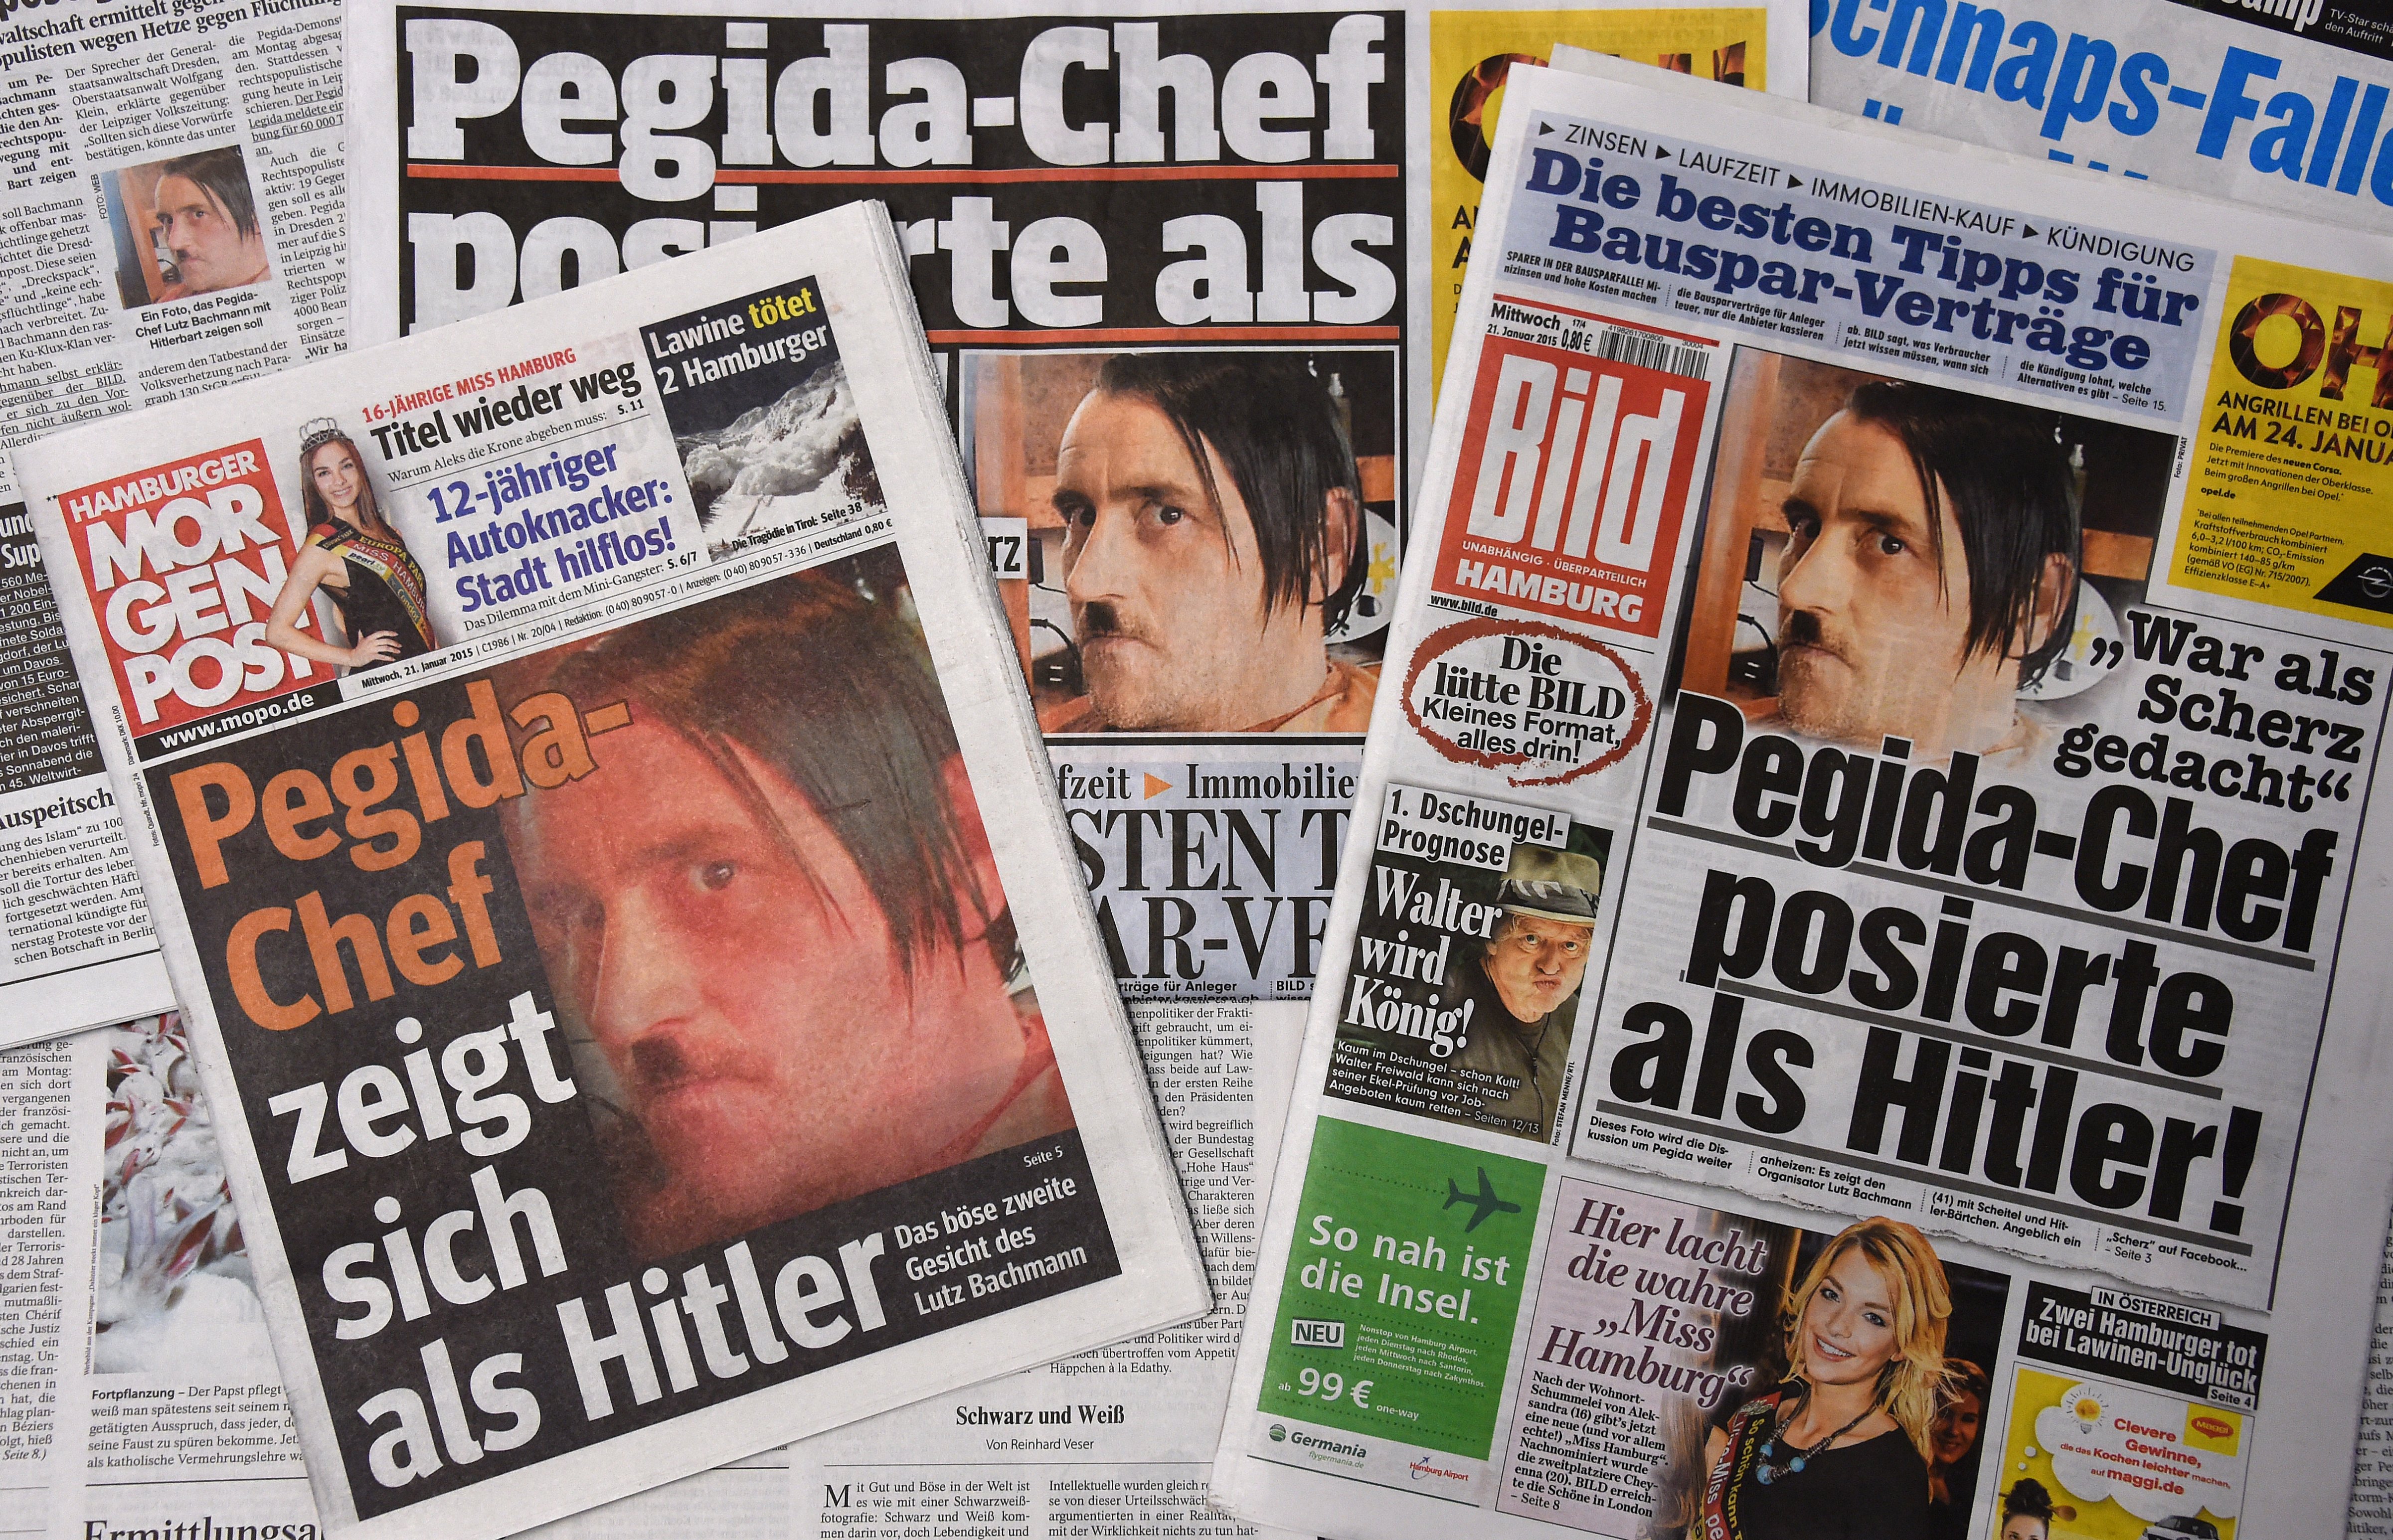 Hitler-picture of PEGIDA-head causes trouble